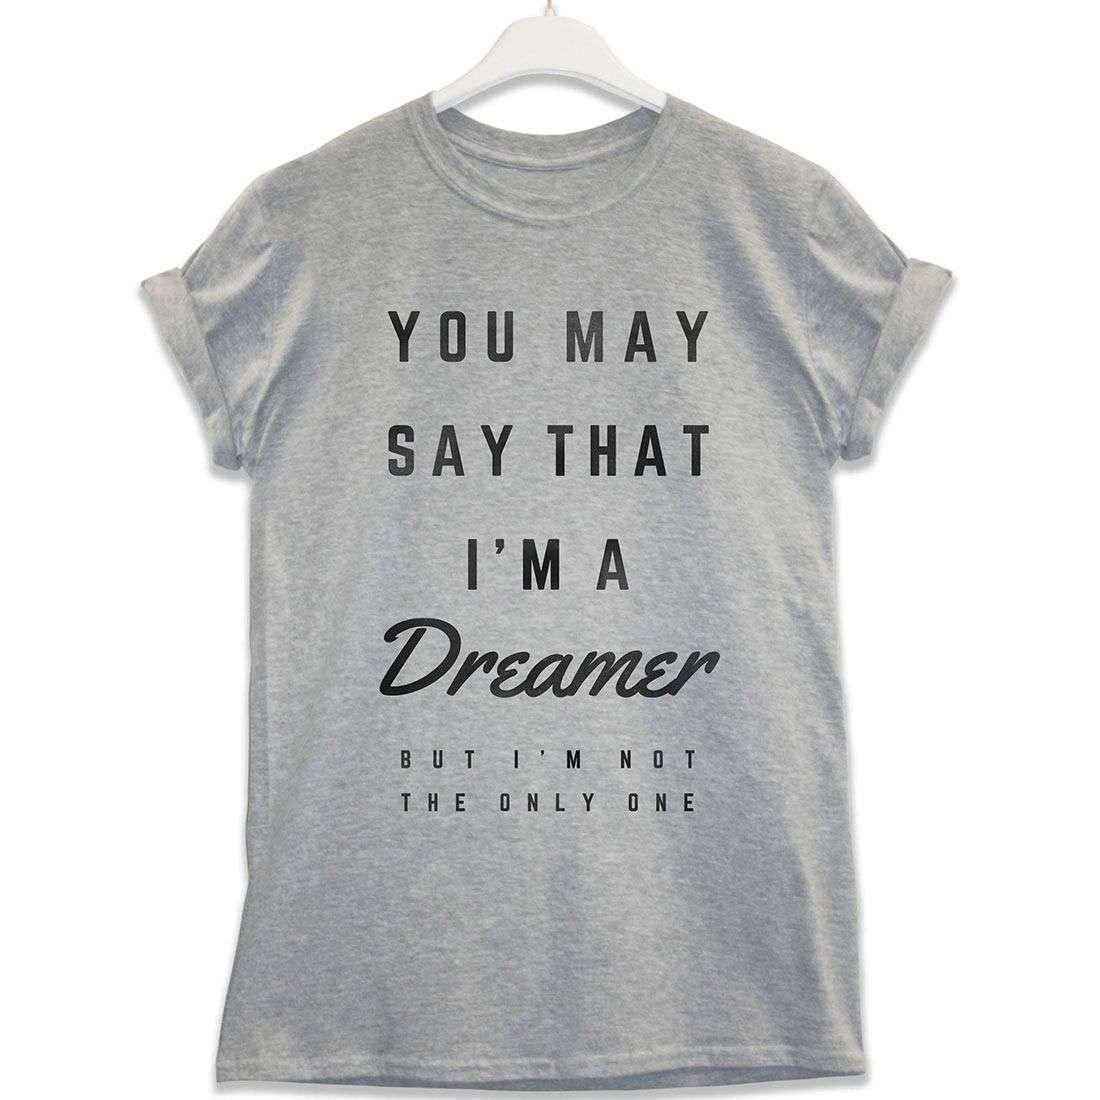 Dreamer Unisex T-Shirt 8Ball